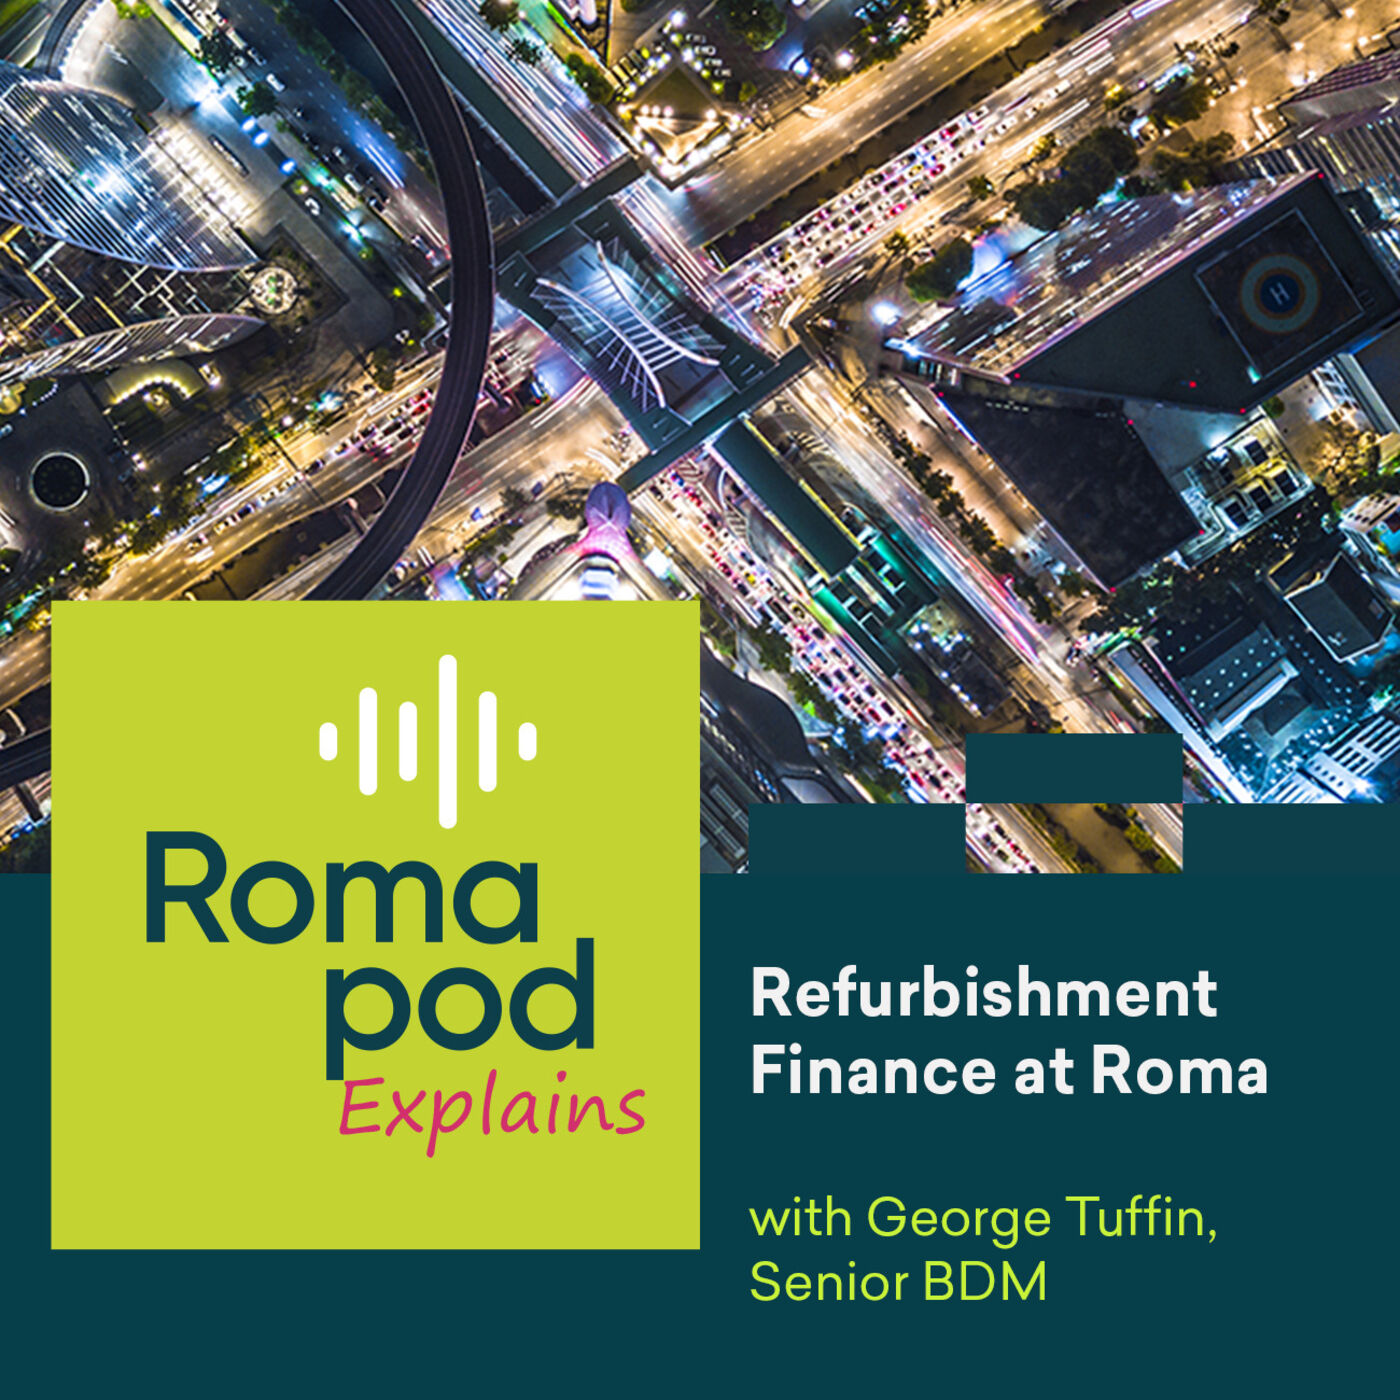 https://romafinance.co.uk/wp-content/uploads/2023/04/Refurbishment-at-Roma.jpg